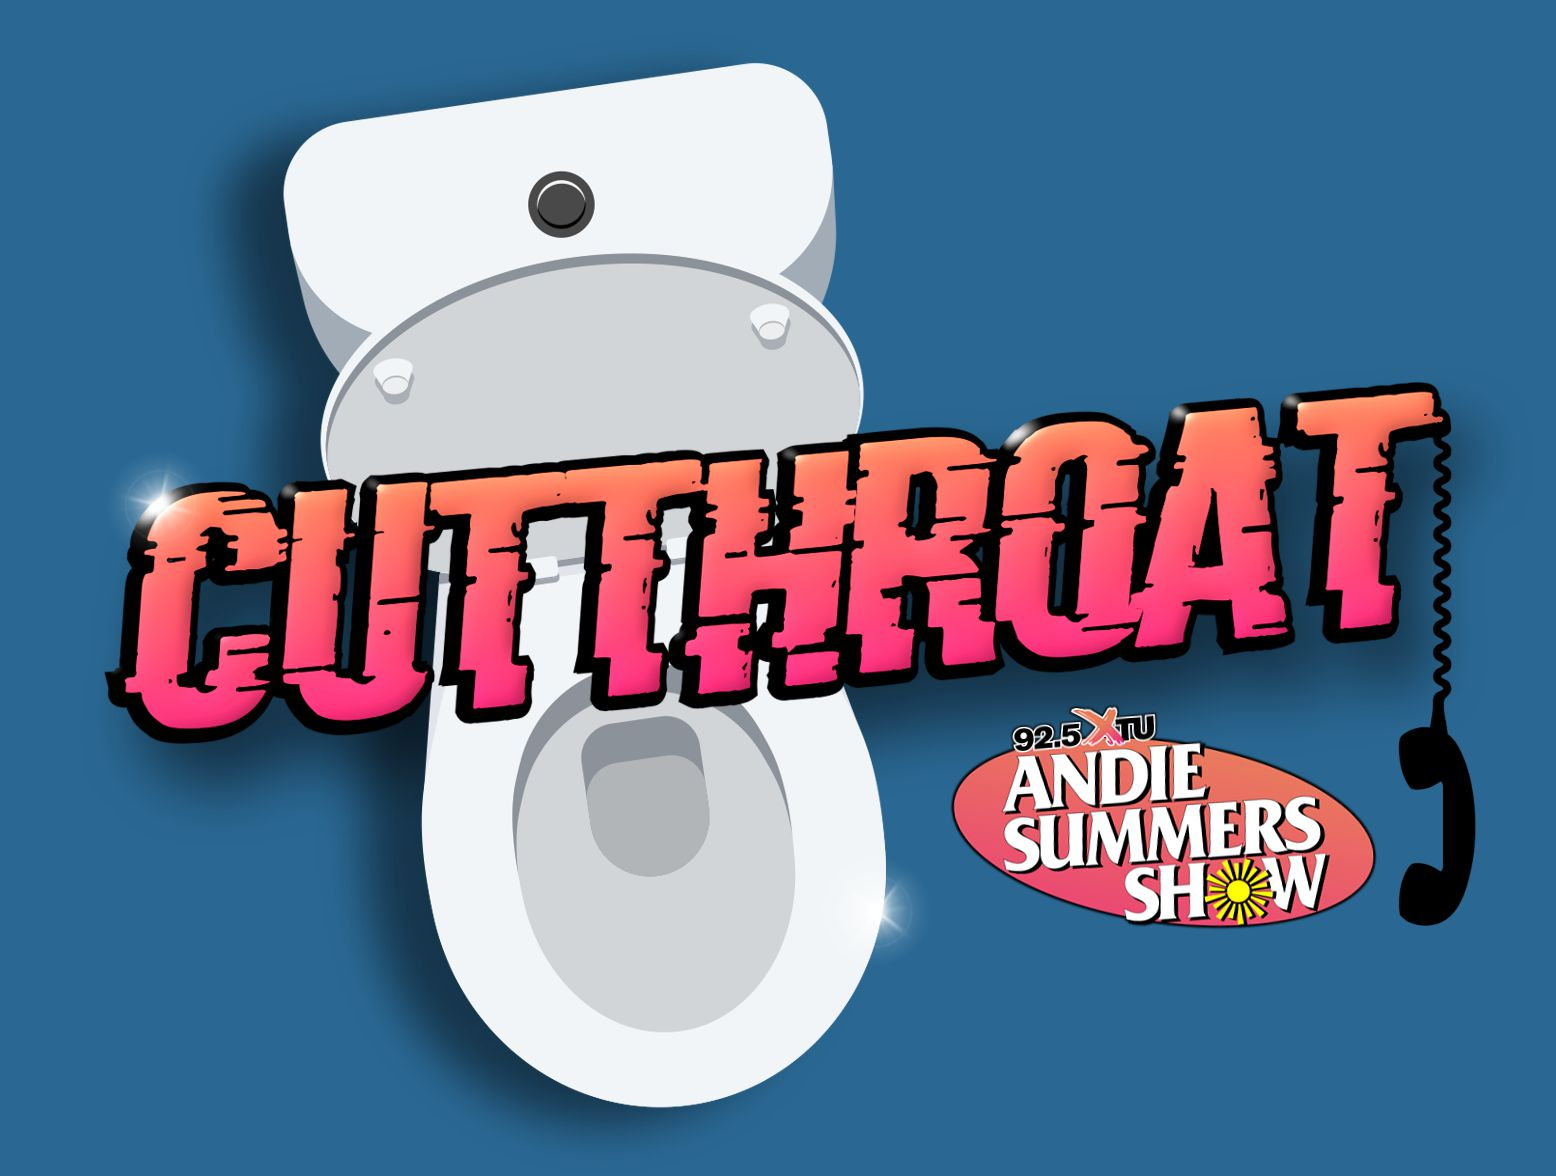 Cutthroat: Reality TV Trivia